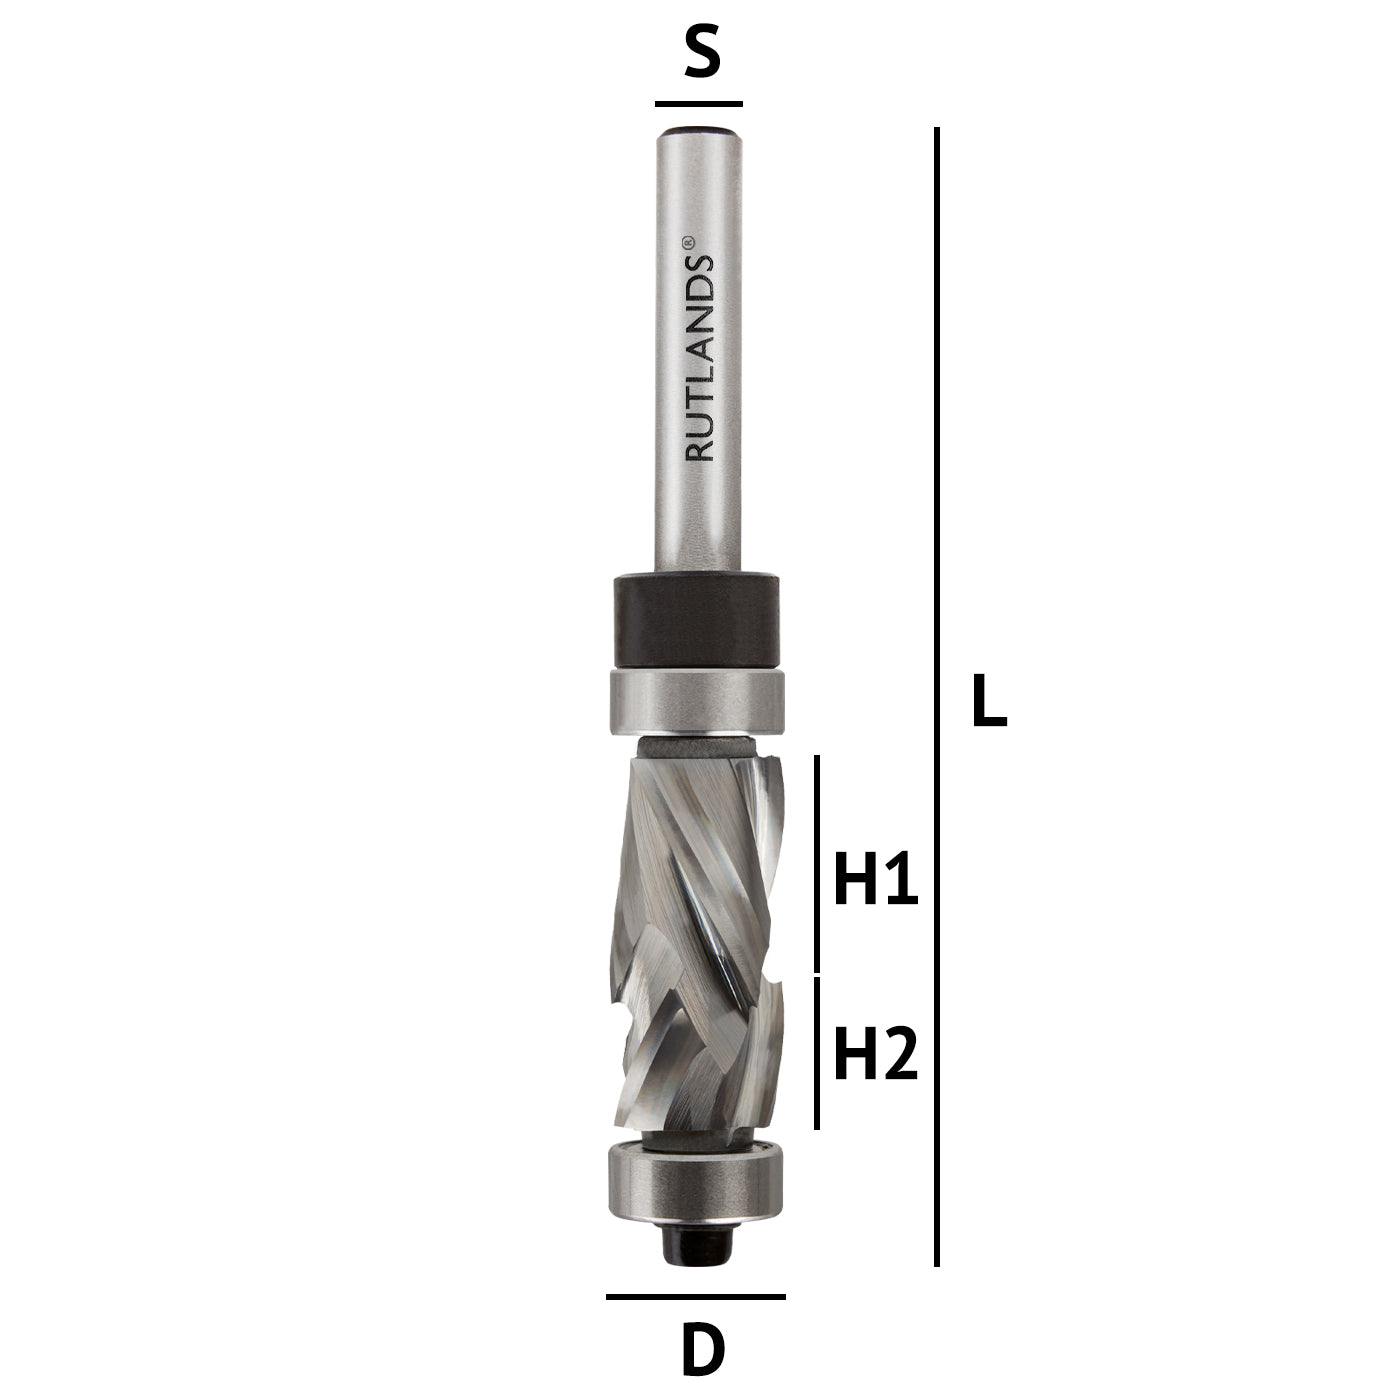 Solid Carbide - Spiral Compression Top & Bottom Bearing - D=12.7mm H1=16mm H2=9.5mm S=1/4"